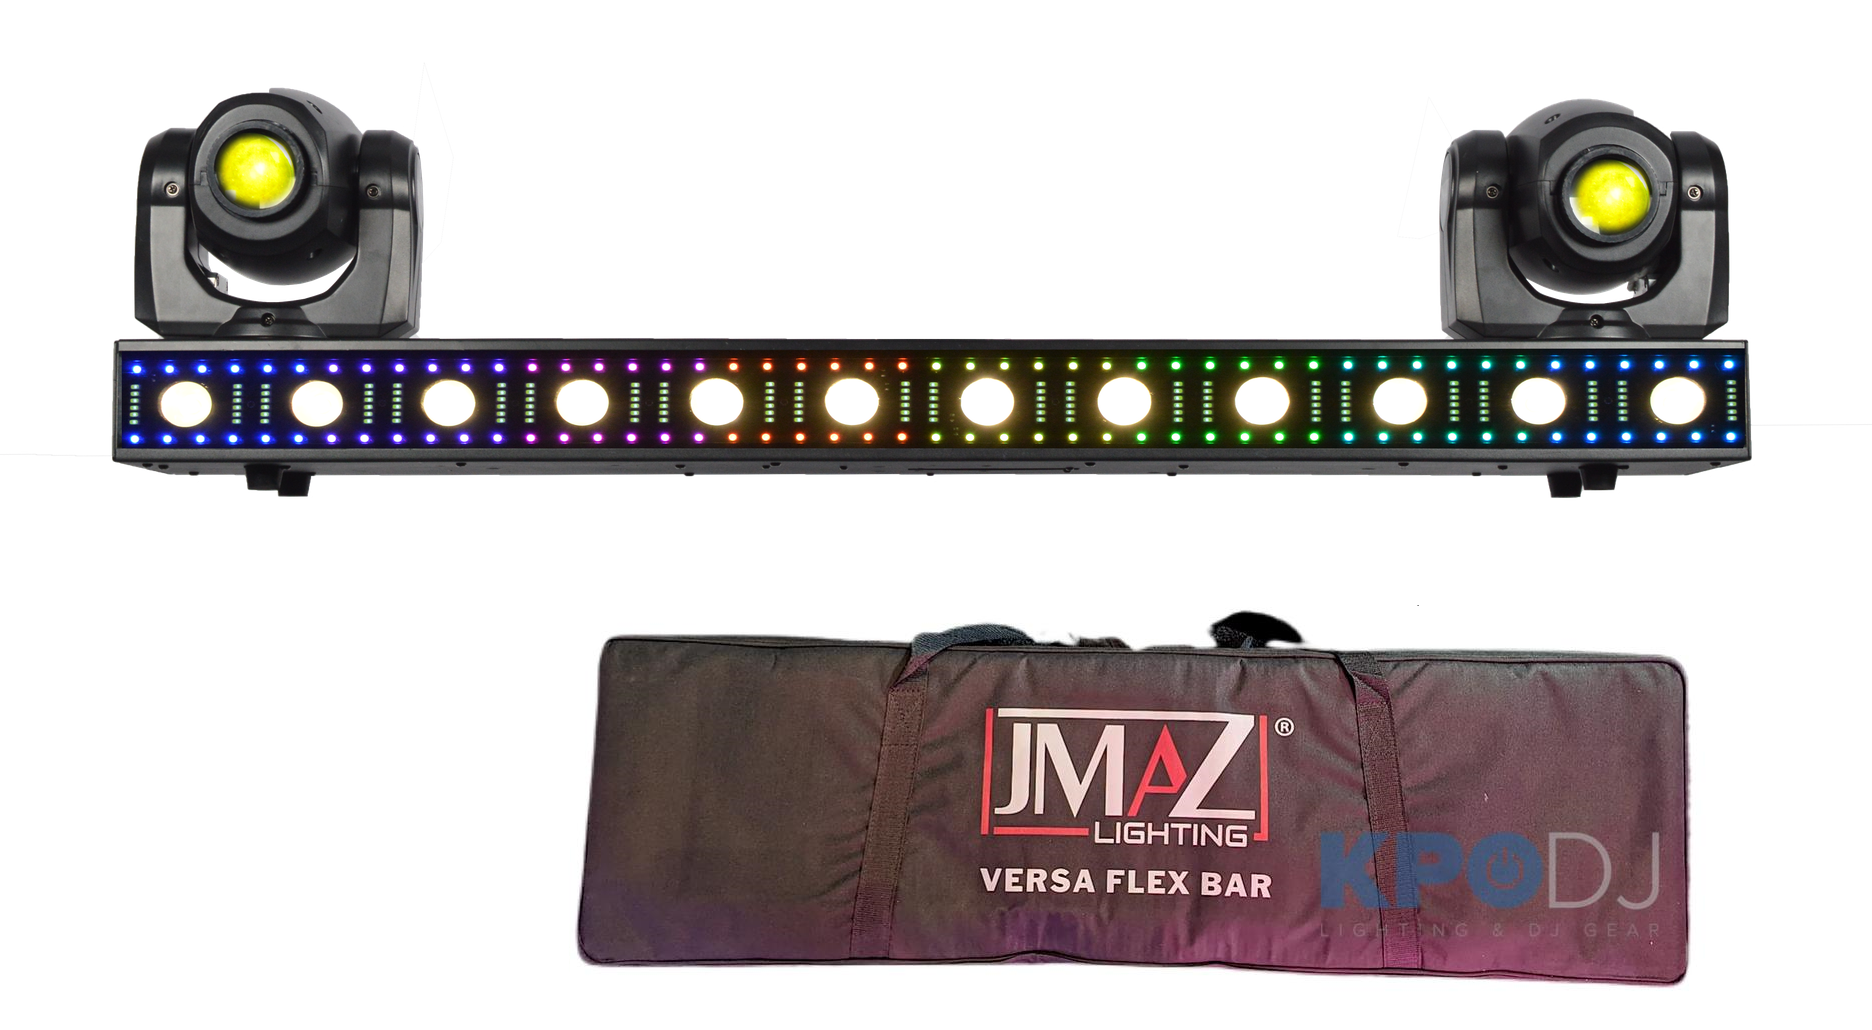 jmaz-versa-flex-bar---all-in-one-lighting-package.png